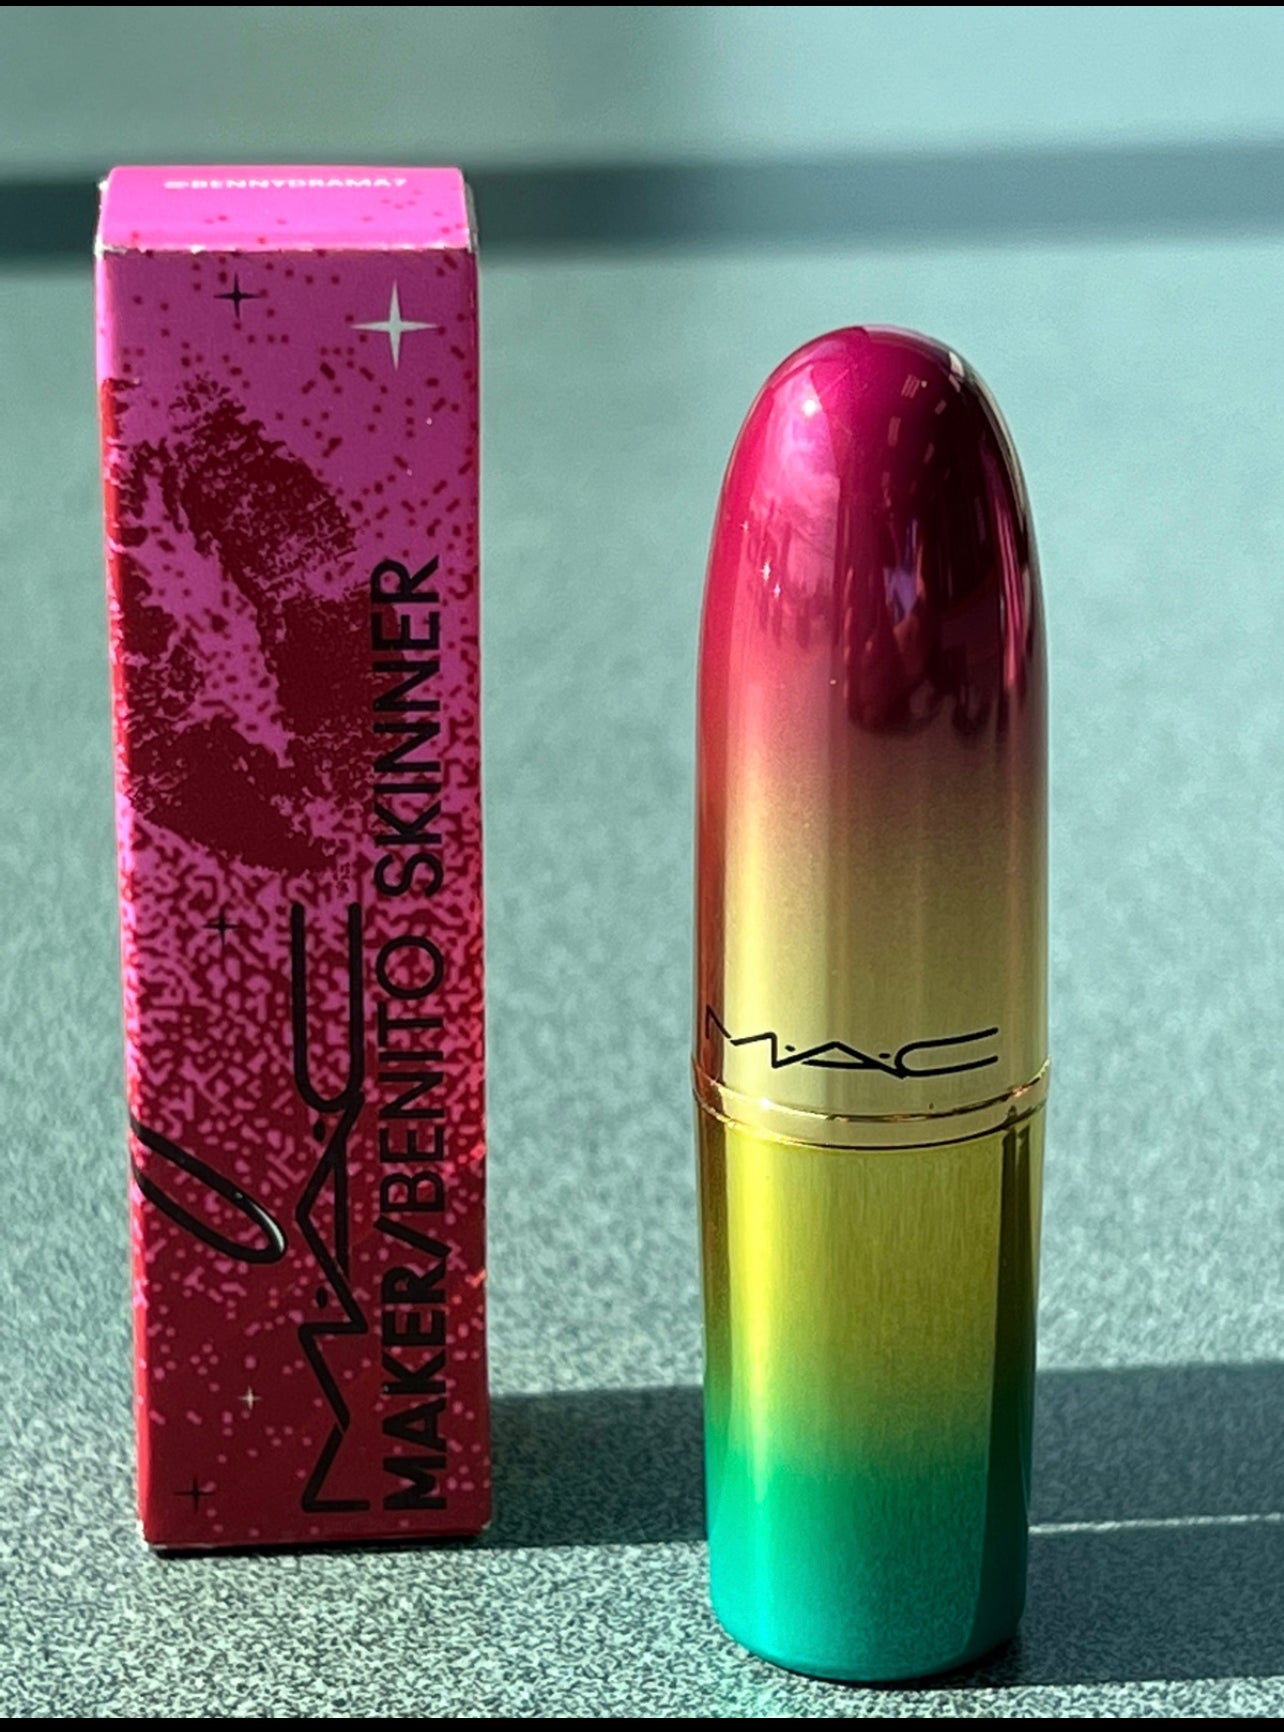 MAC Maker Benito Skinner Amplified Lipstick